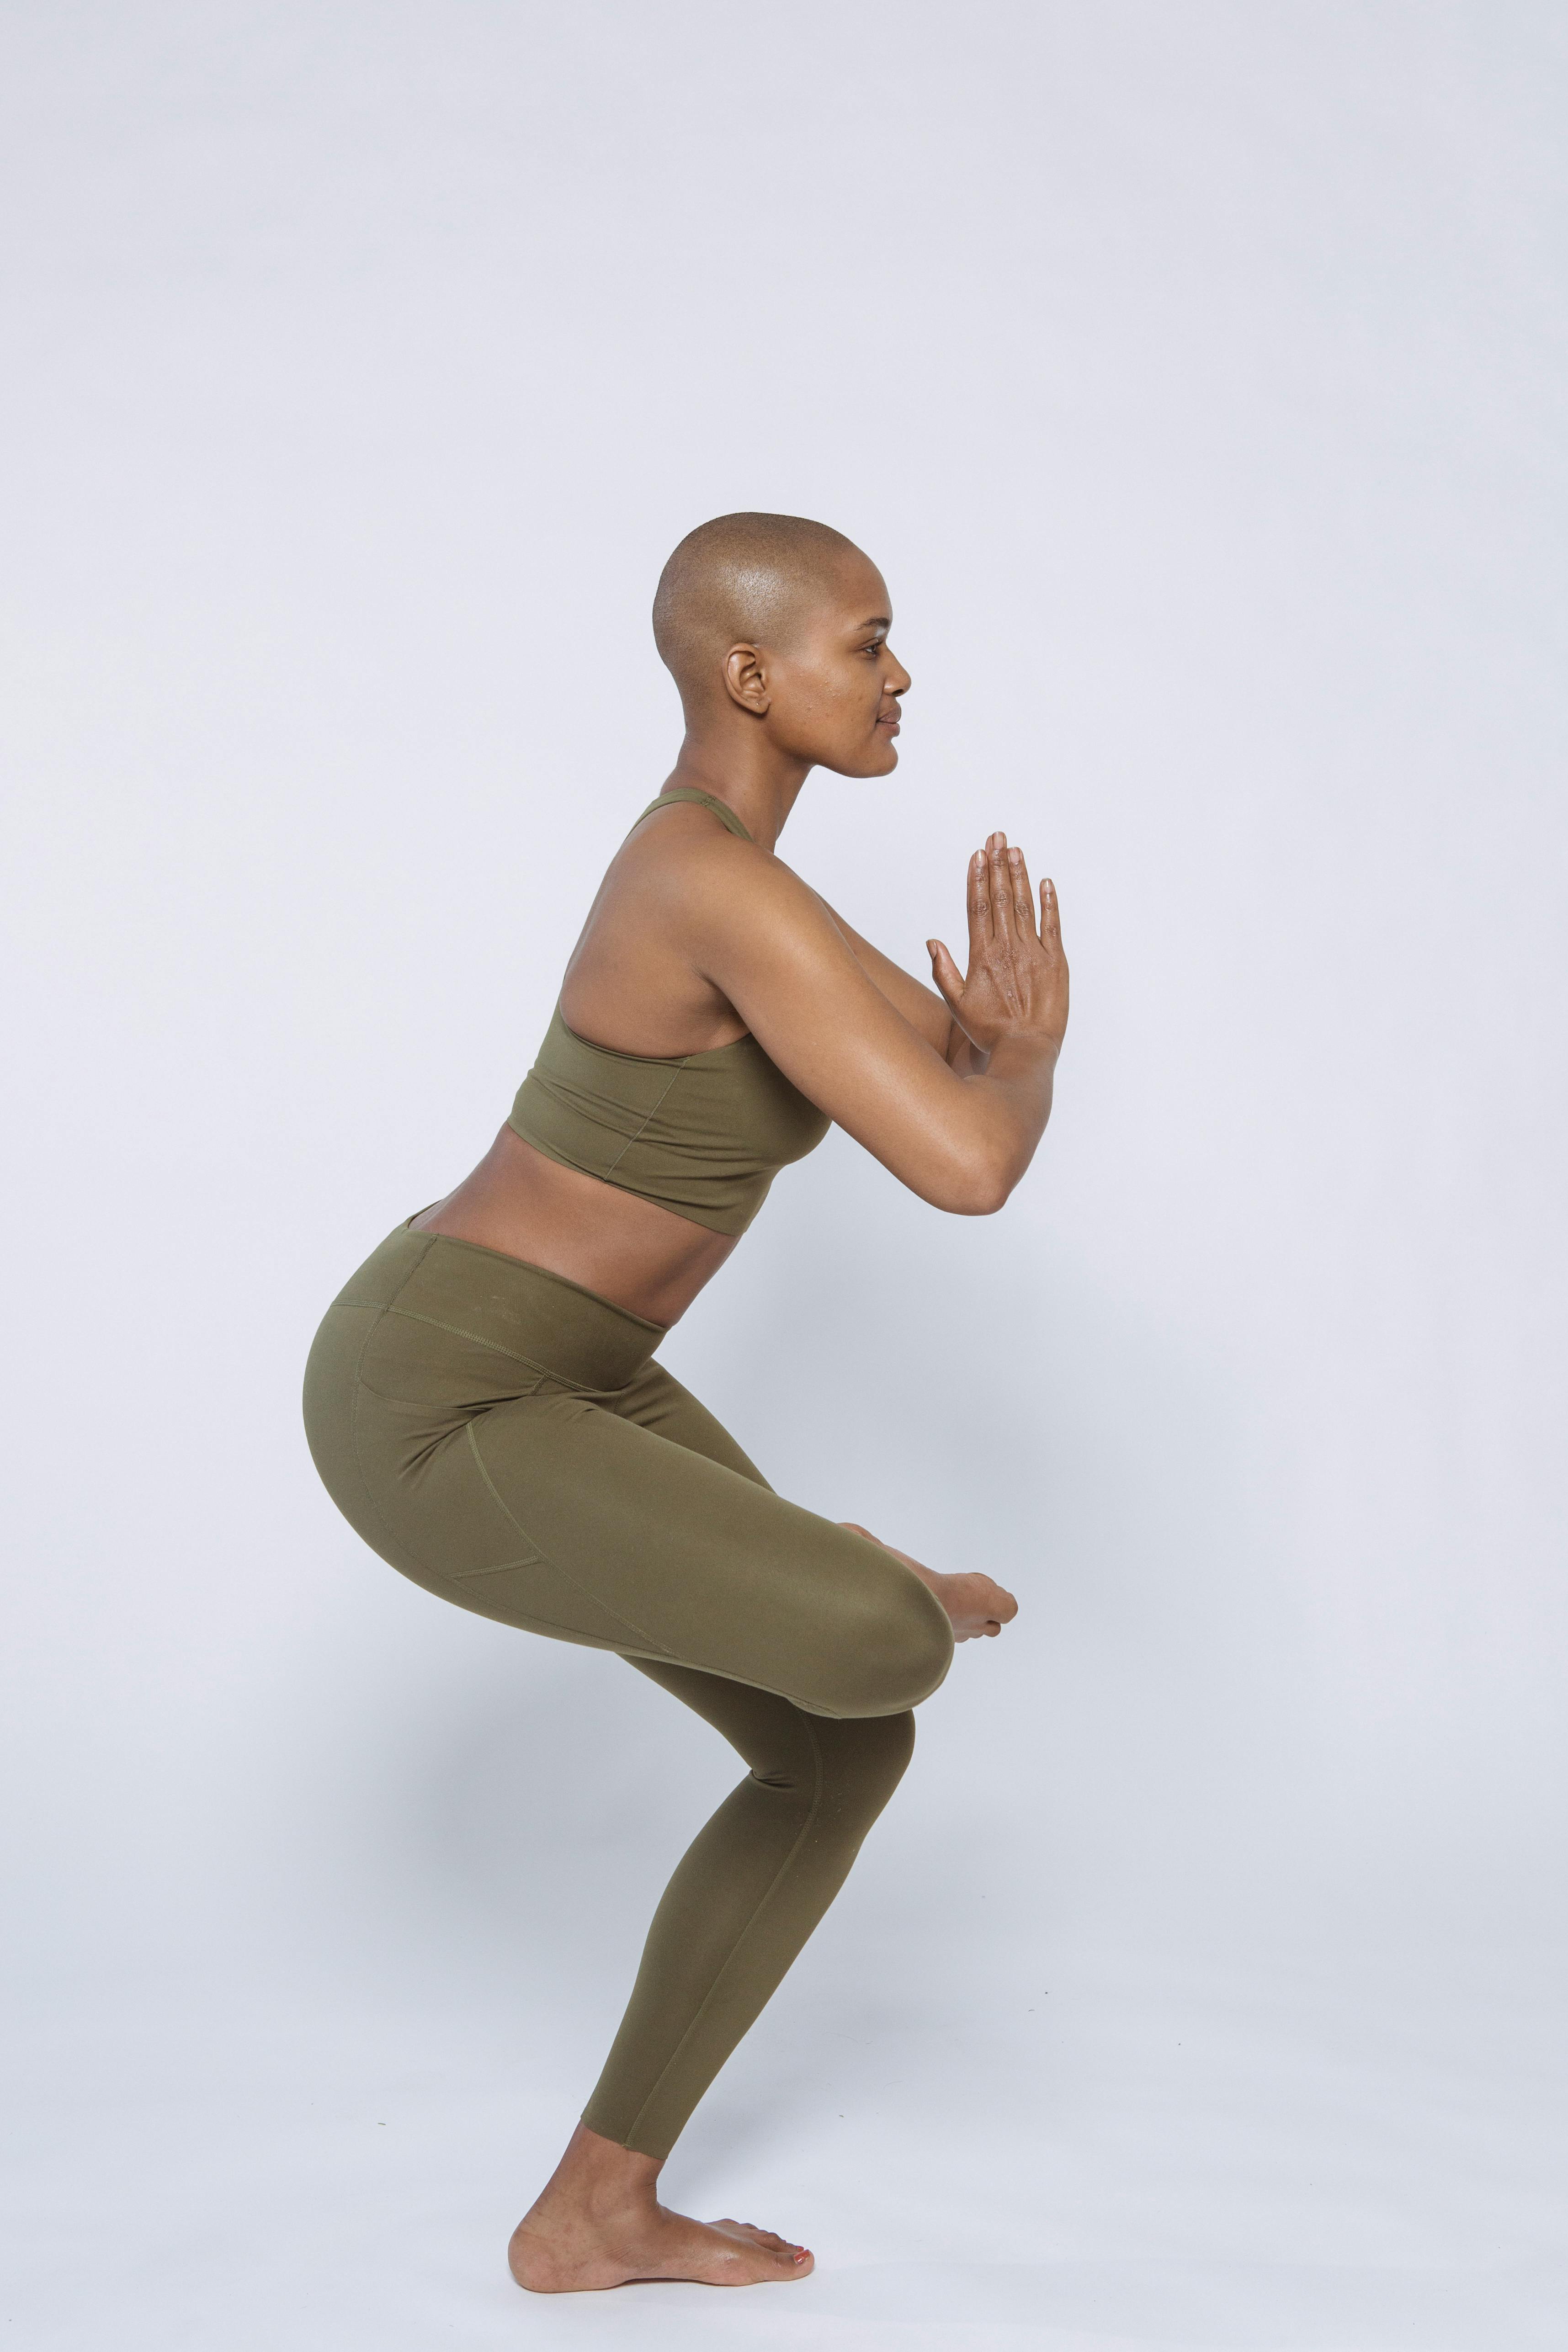 Lotus Pose Padmasana Sequence | Jason Crandell Yoga Method